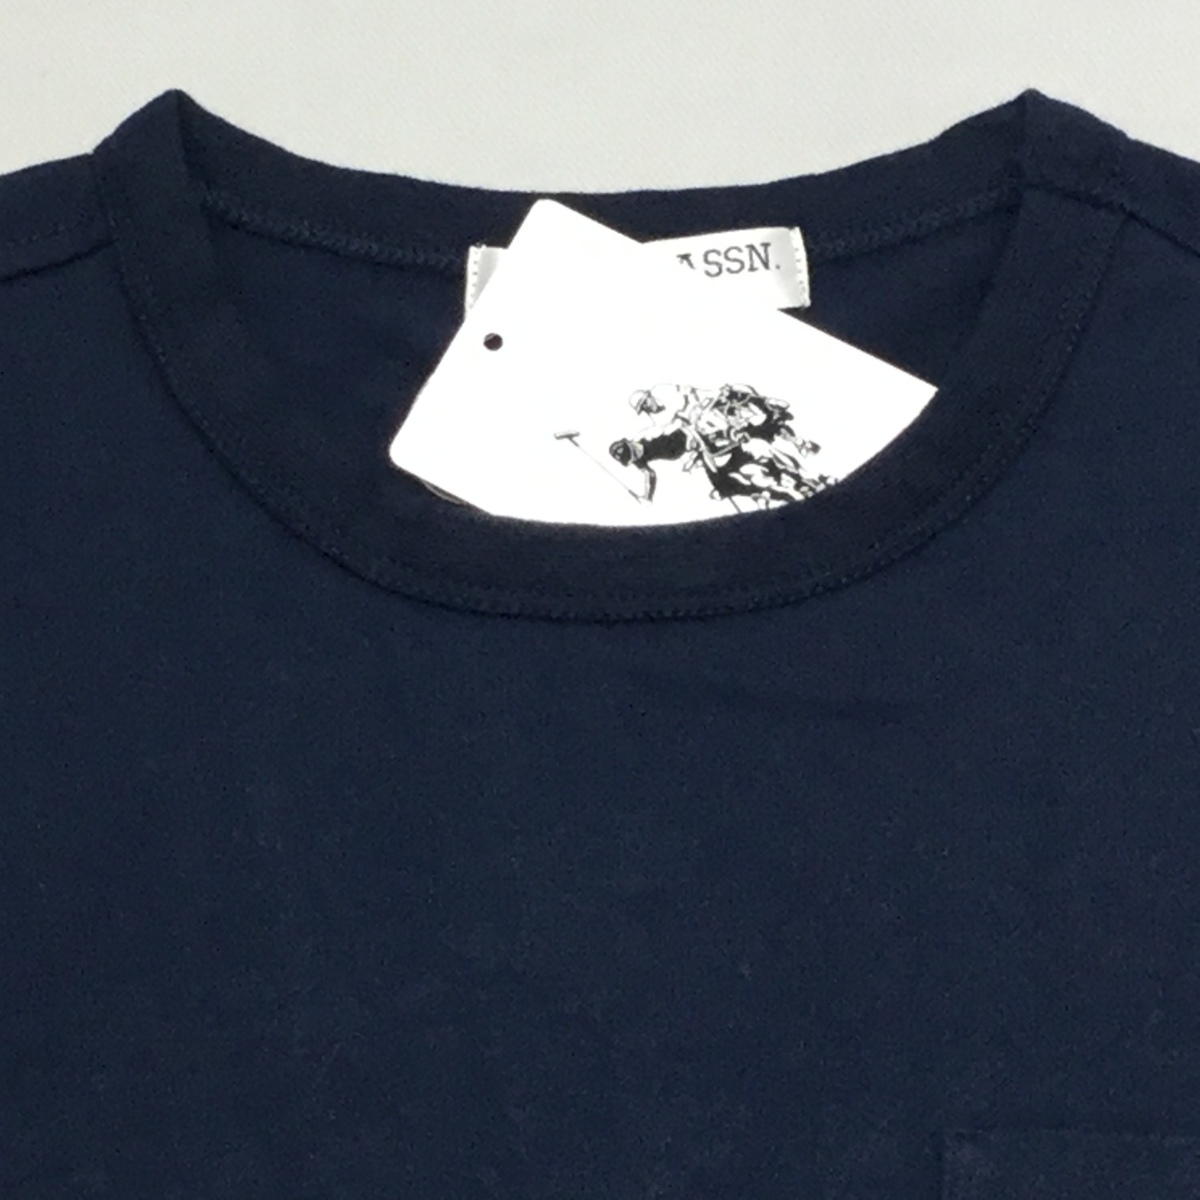 Us Polo Assn メンズ半袖tシャツ 身幅狭めのスリムタイプ L ネイビー 022 無地 売買されたオークション情報 Yahooの商品情報をアーカイブ公開 オークファン Aucfan Com